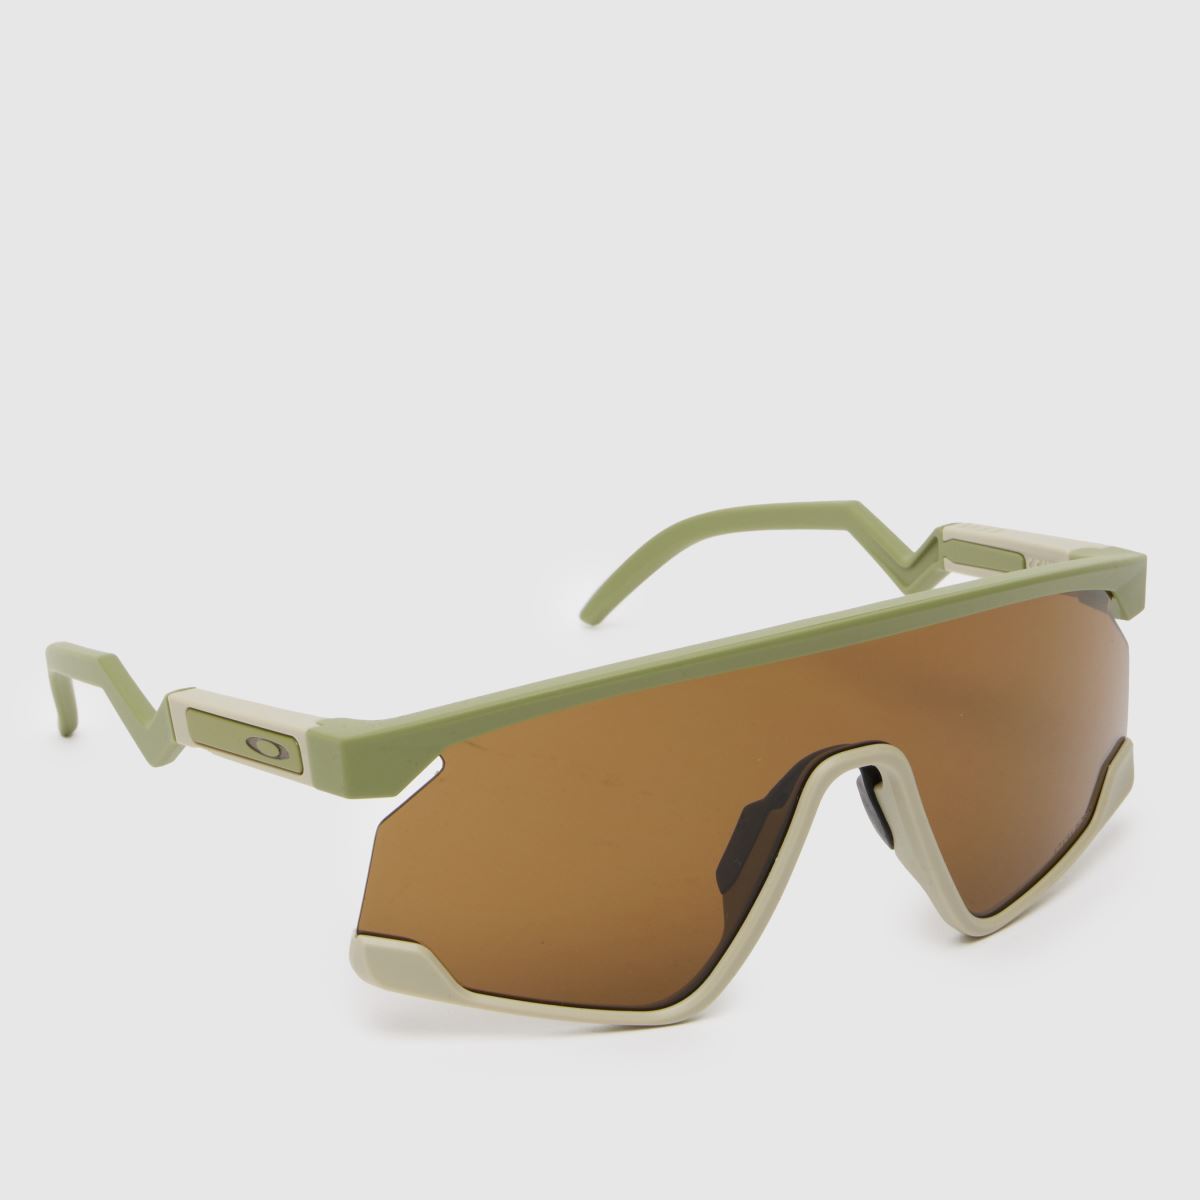 Oakley gold bxtr sunglasses